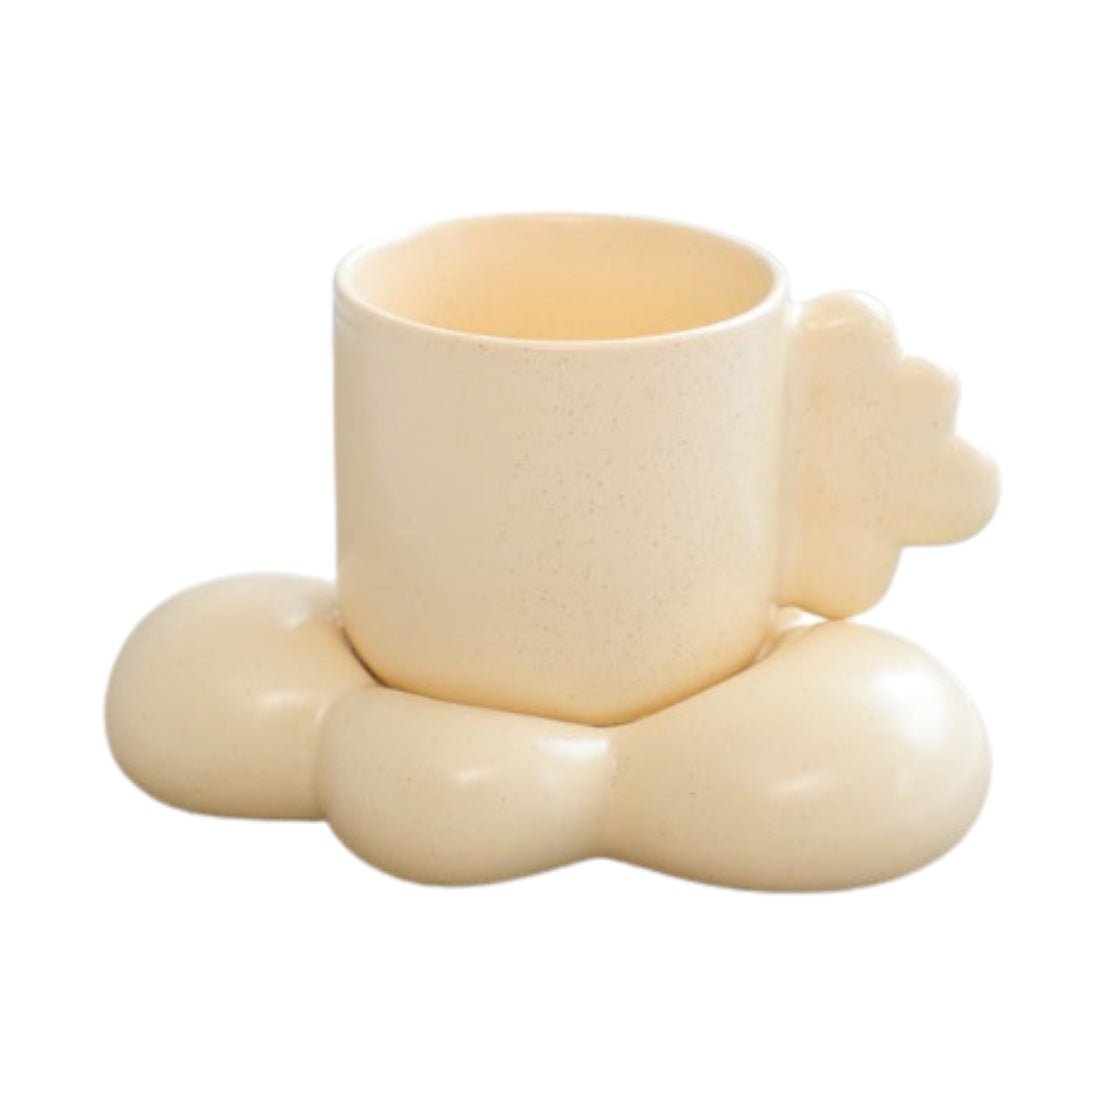 Yellow ceramic mug with cloud handle and saucer